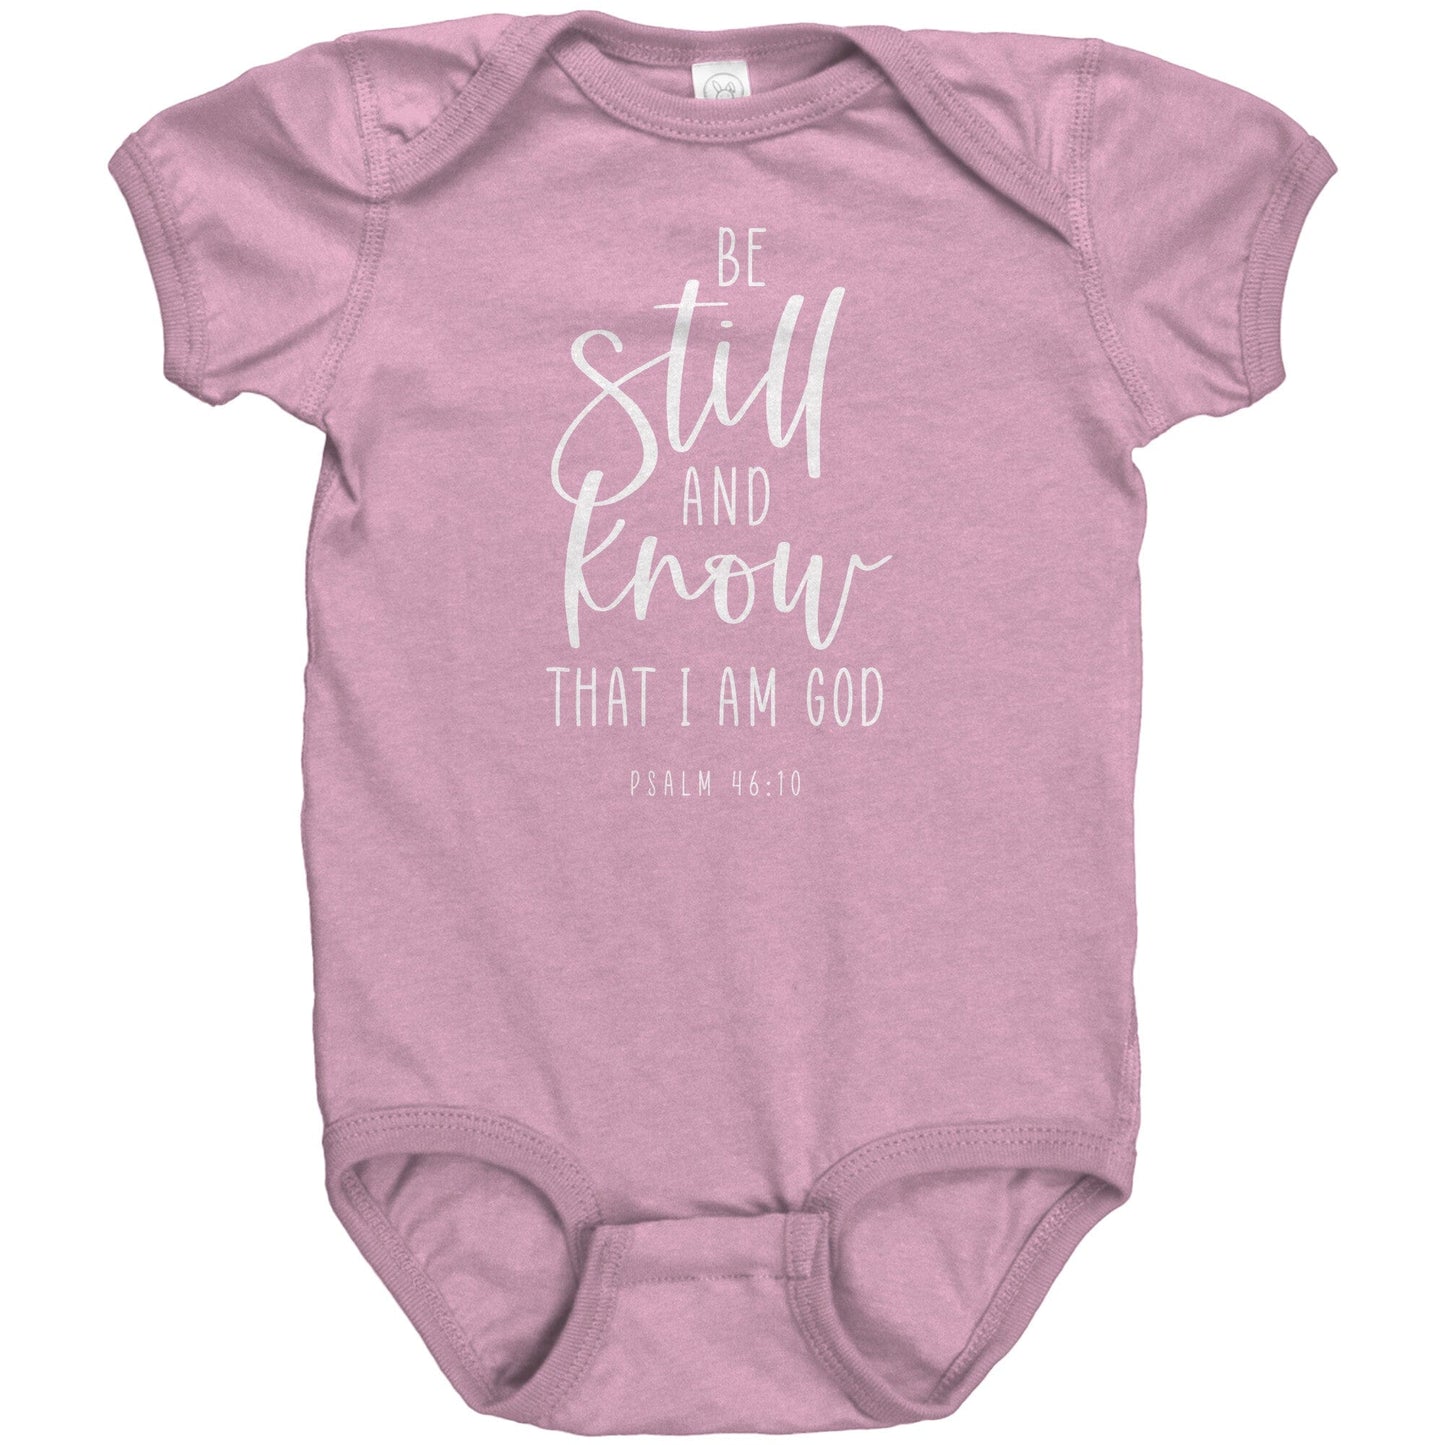 Psalm 46:10 Baby Bodysuit